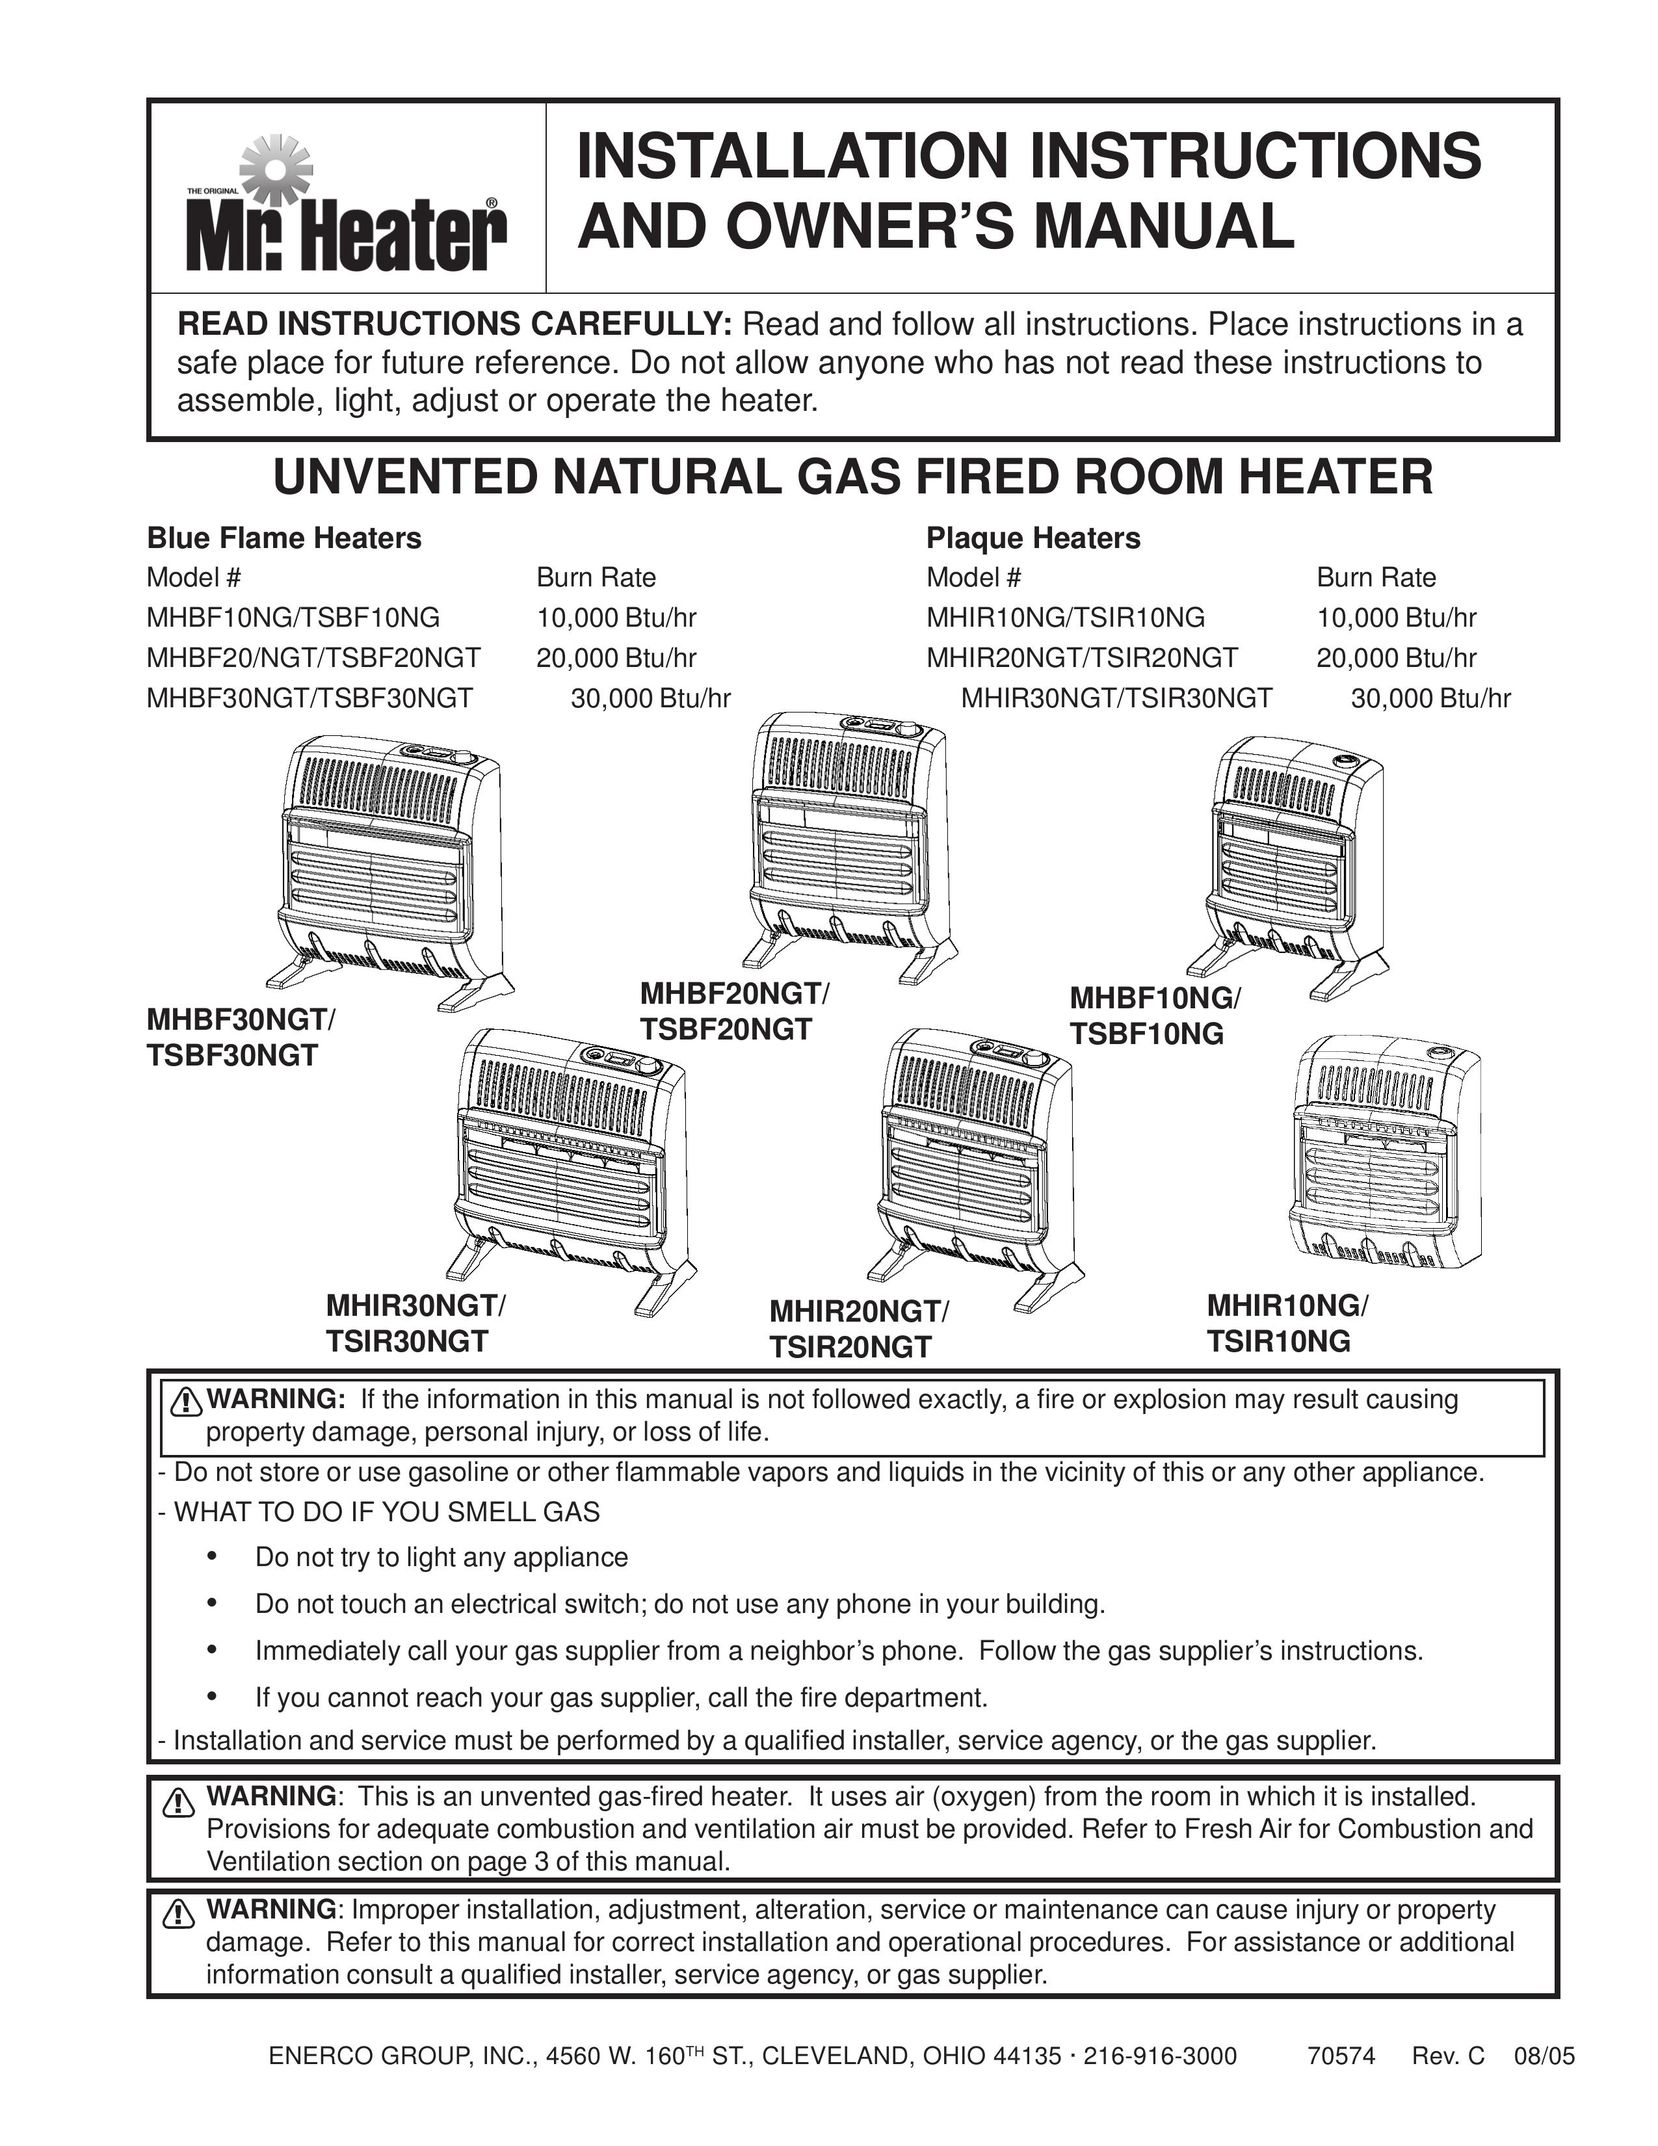 Enerco MHBF20/NGT Water Heater User Manual